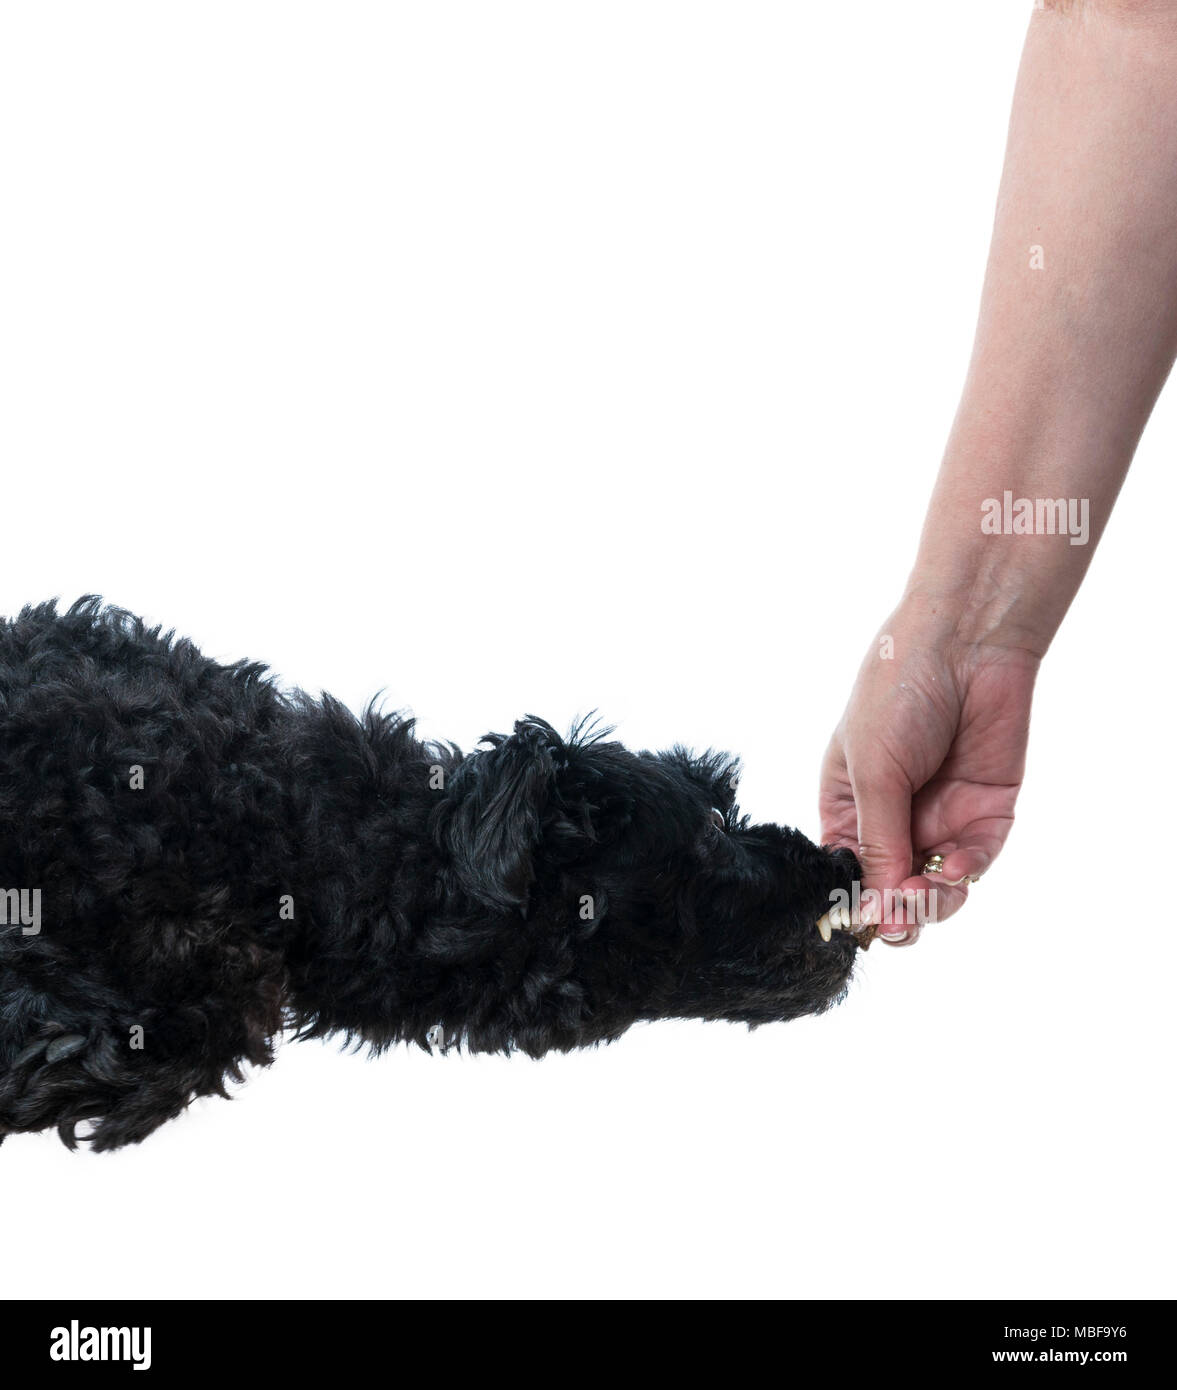 Hembra de alimentación a mano un perro tratar a un perro negro Foto de stock